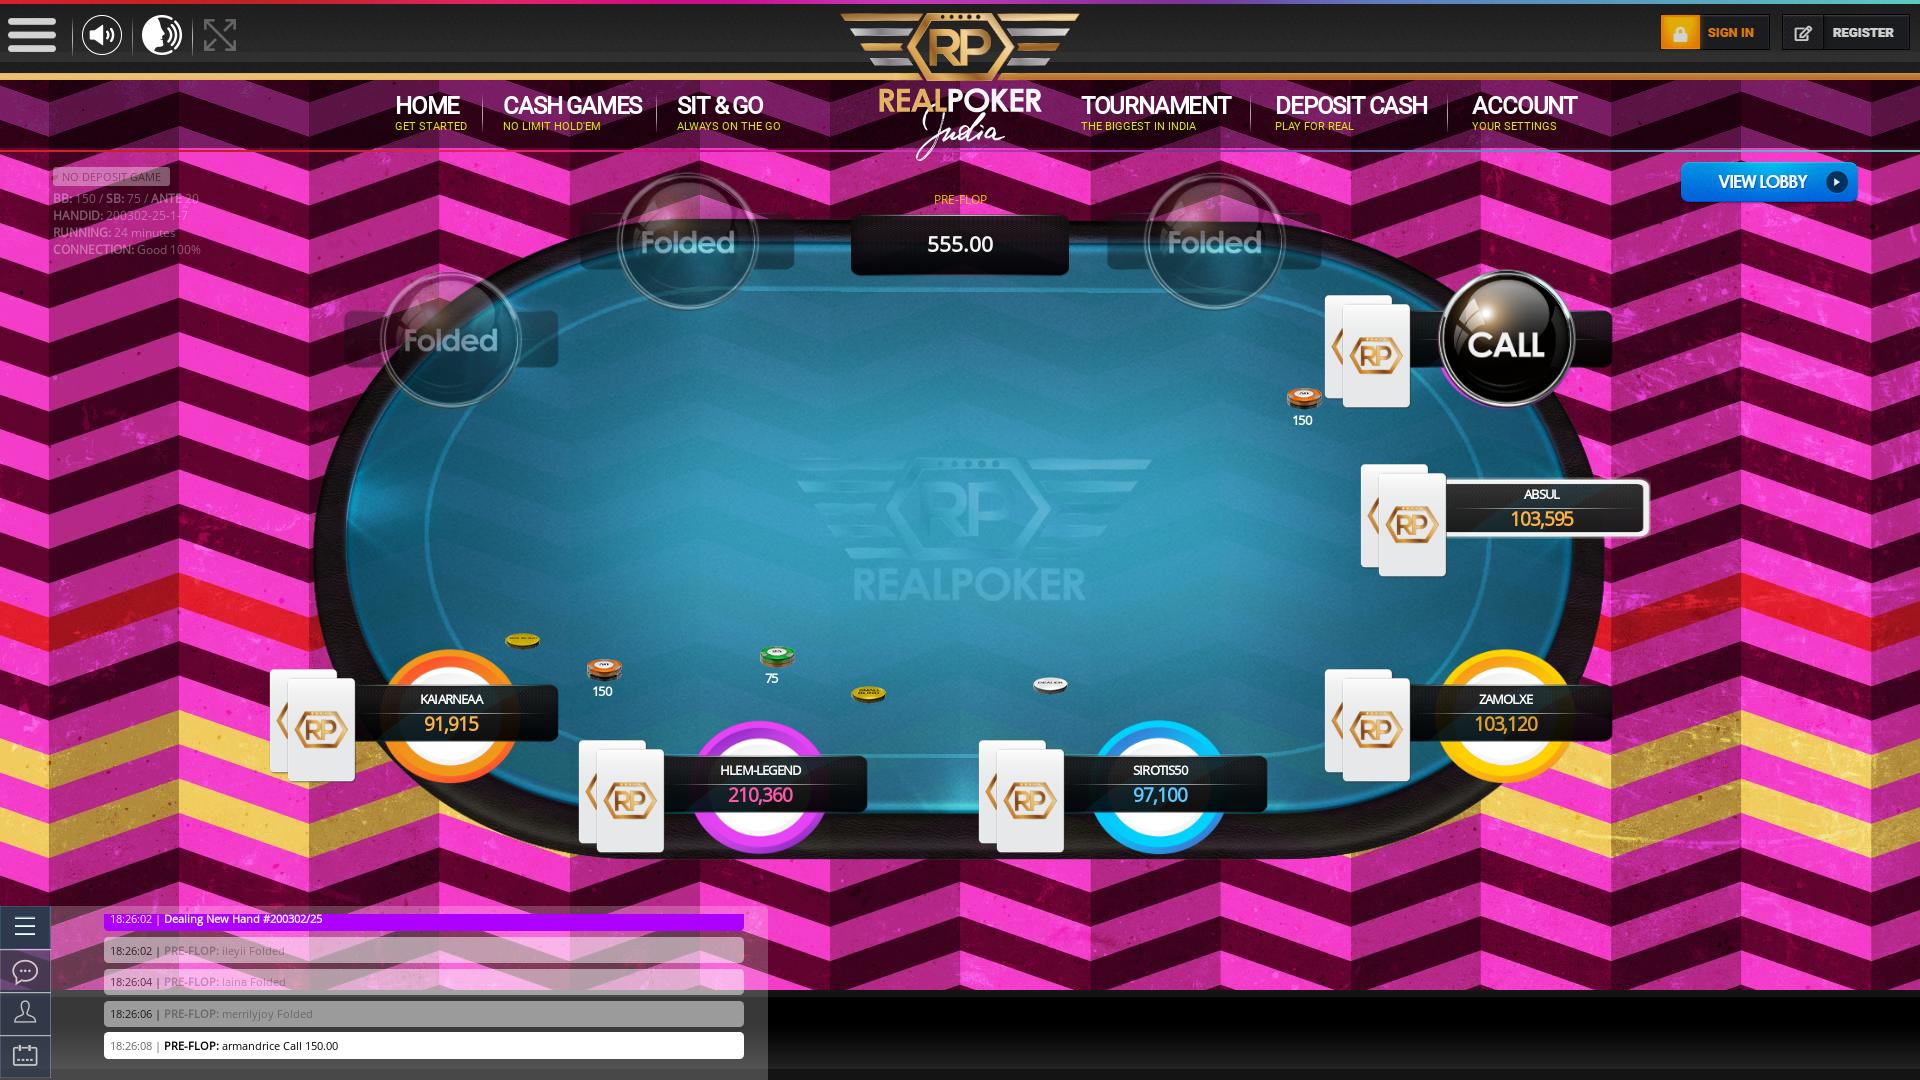 Mandovi River online poker